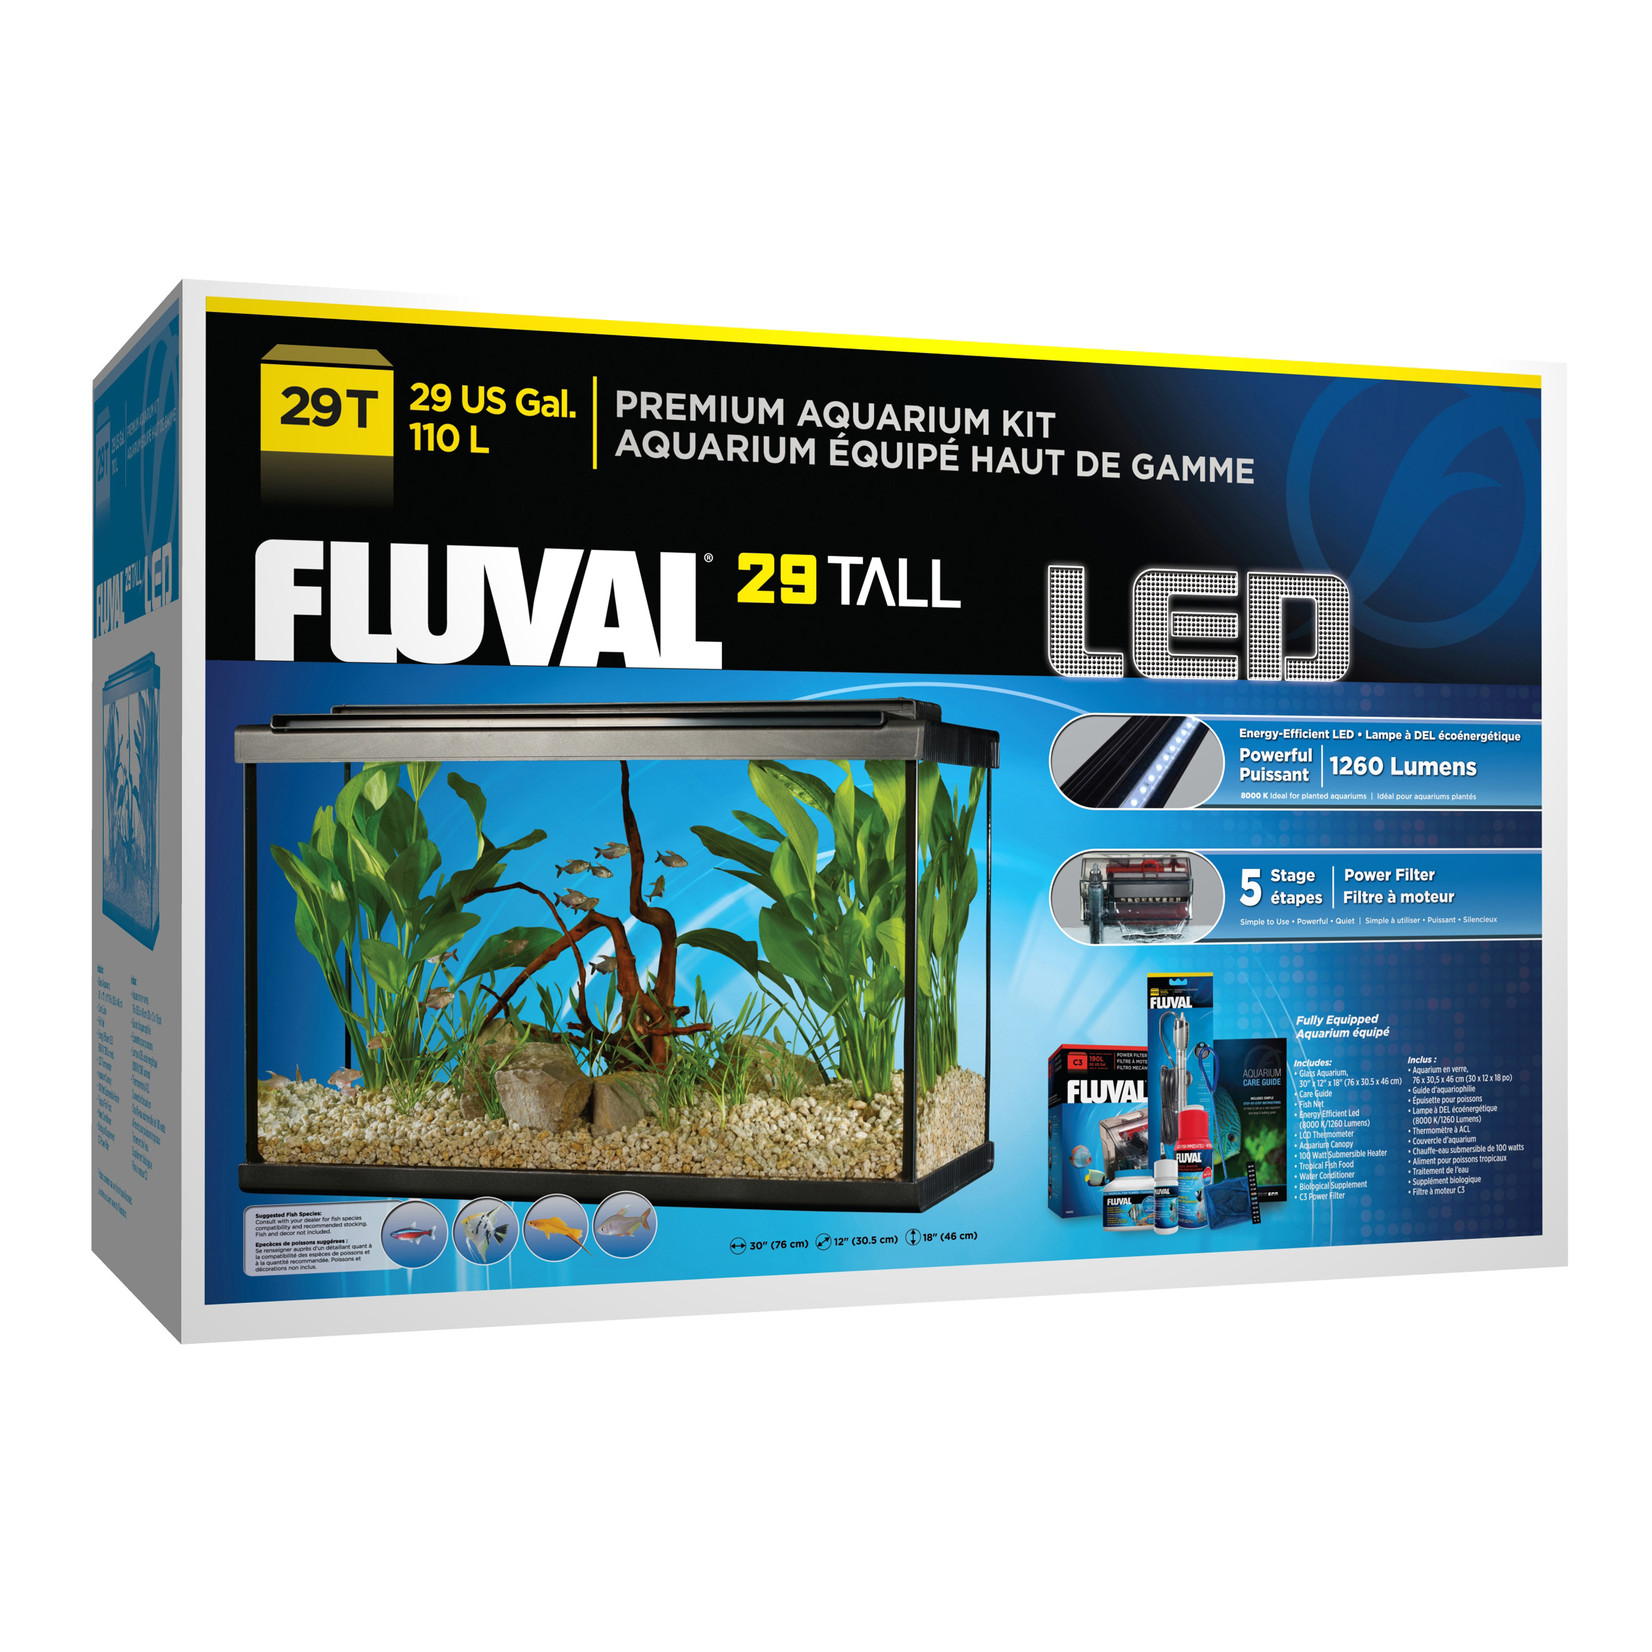 FLUVAL (W) Fluval Premium Aquarium Kit with LED - 29 Tall - 110 L (29 US Gal)